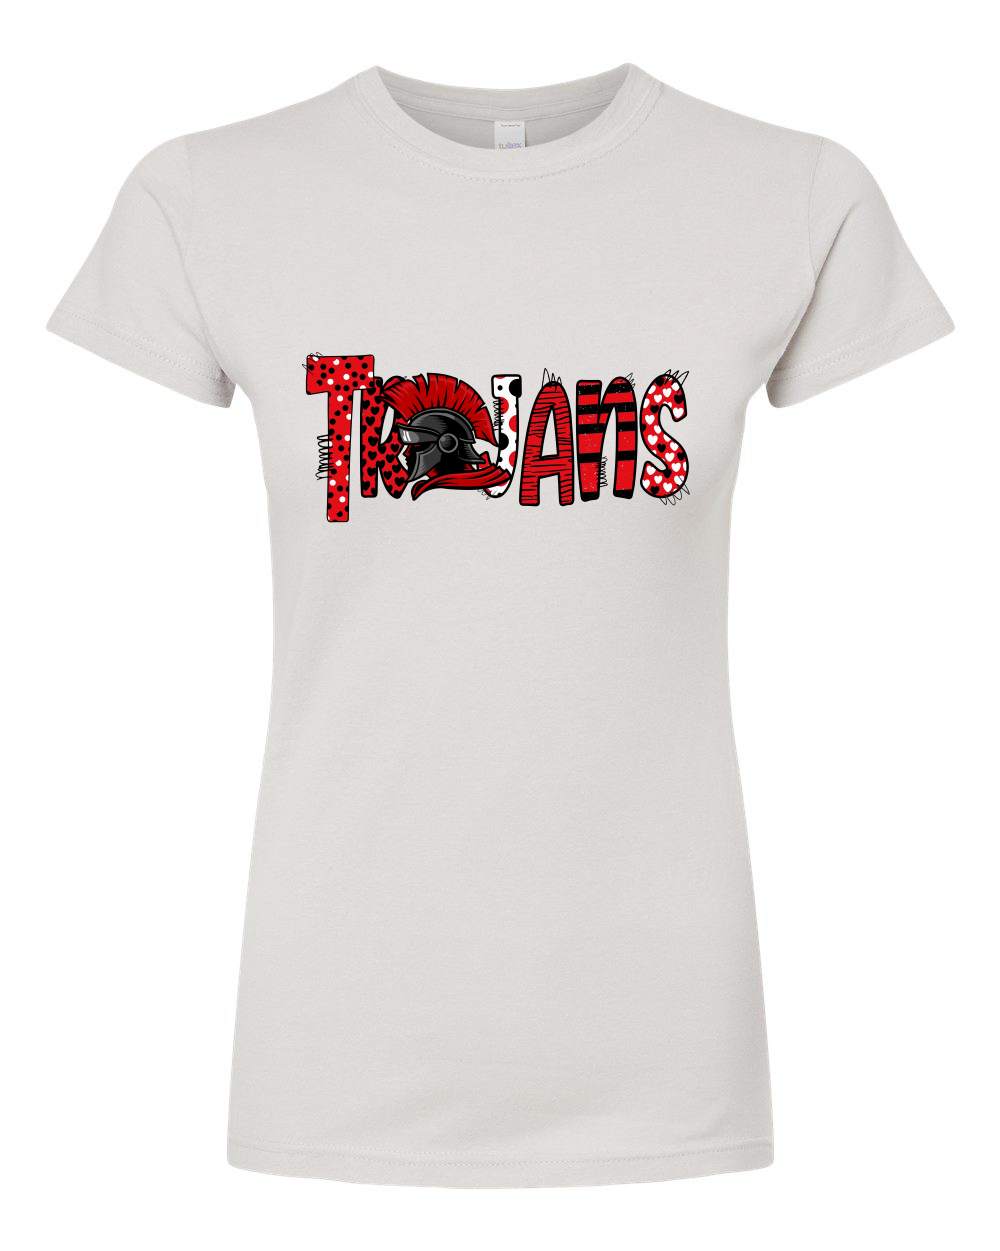 Lady Trojans Shirt - CGHC